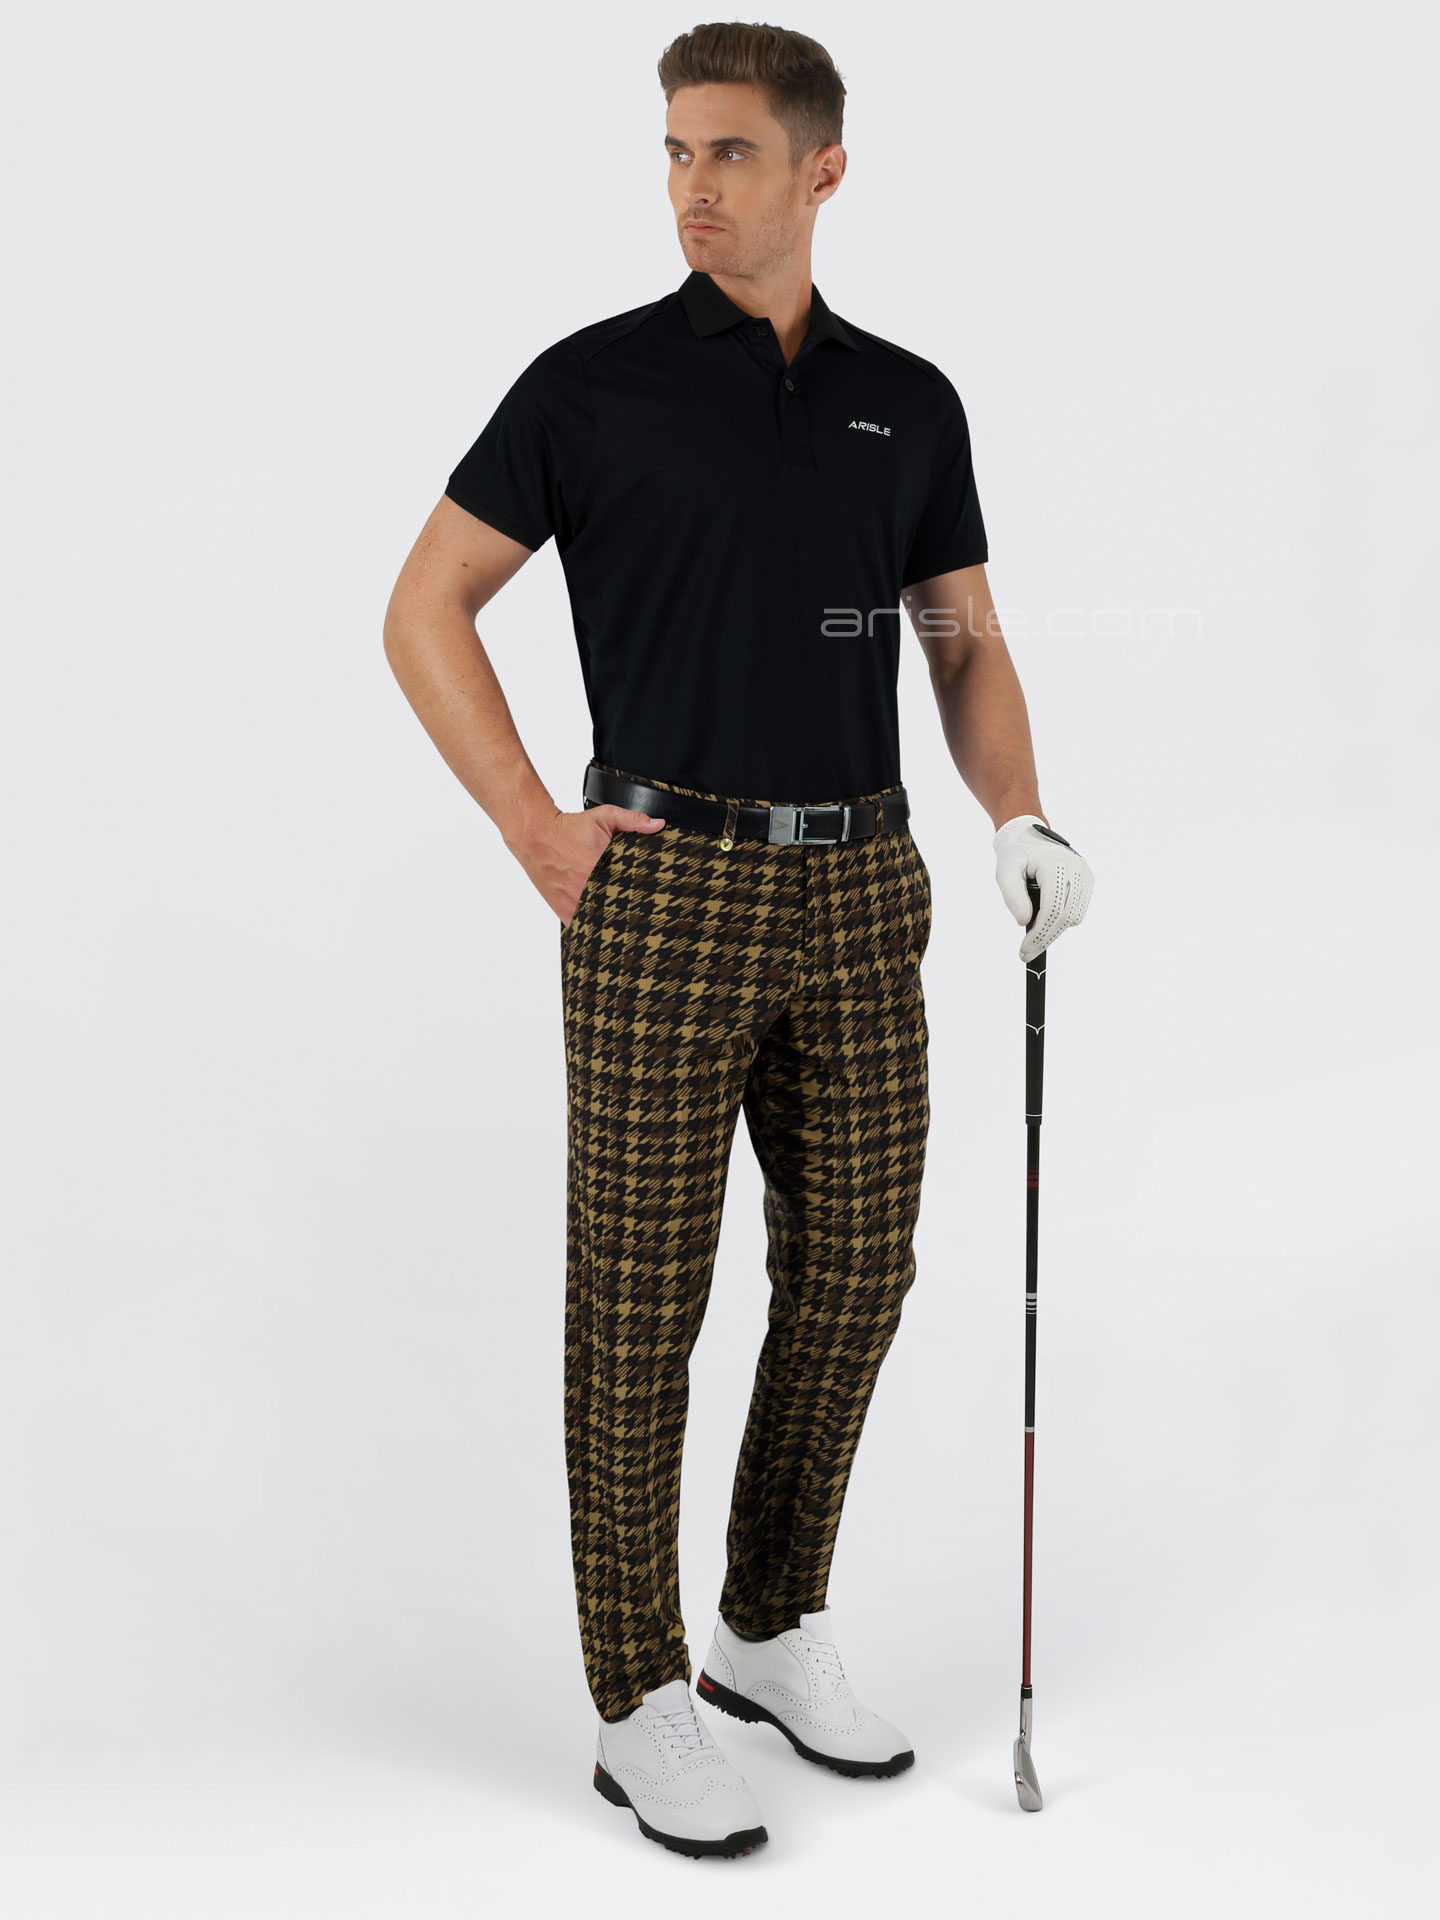 Quan-Dai-Golf-Nam-ARISLE-Designer-Series-Pattern-Golden-Brown-2